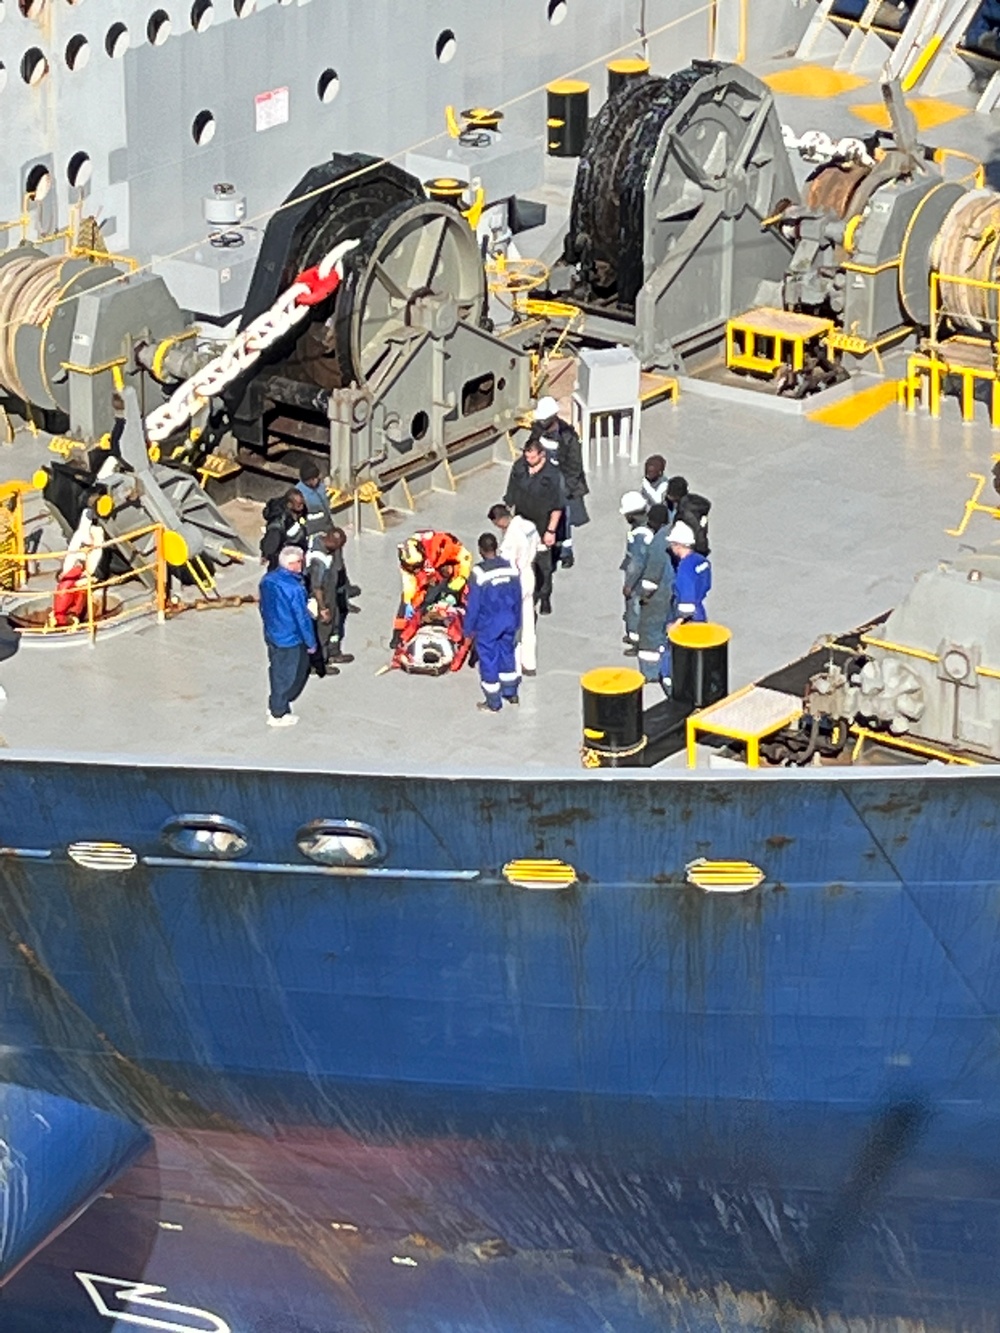 Coast Guard medevacs injured crewman from container ship near Galveston, Texas